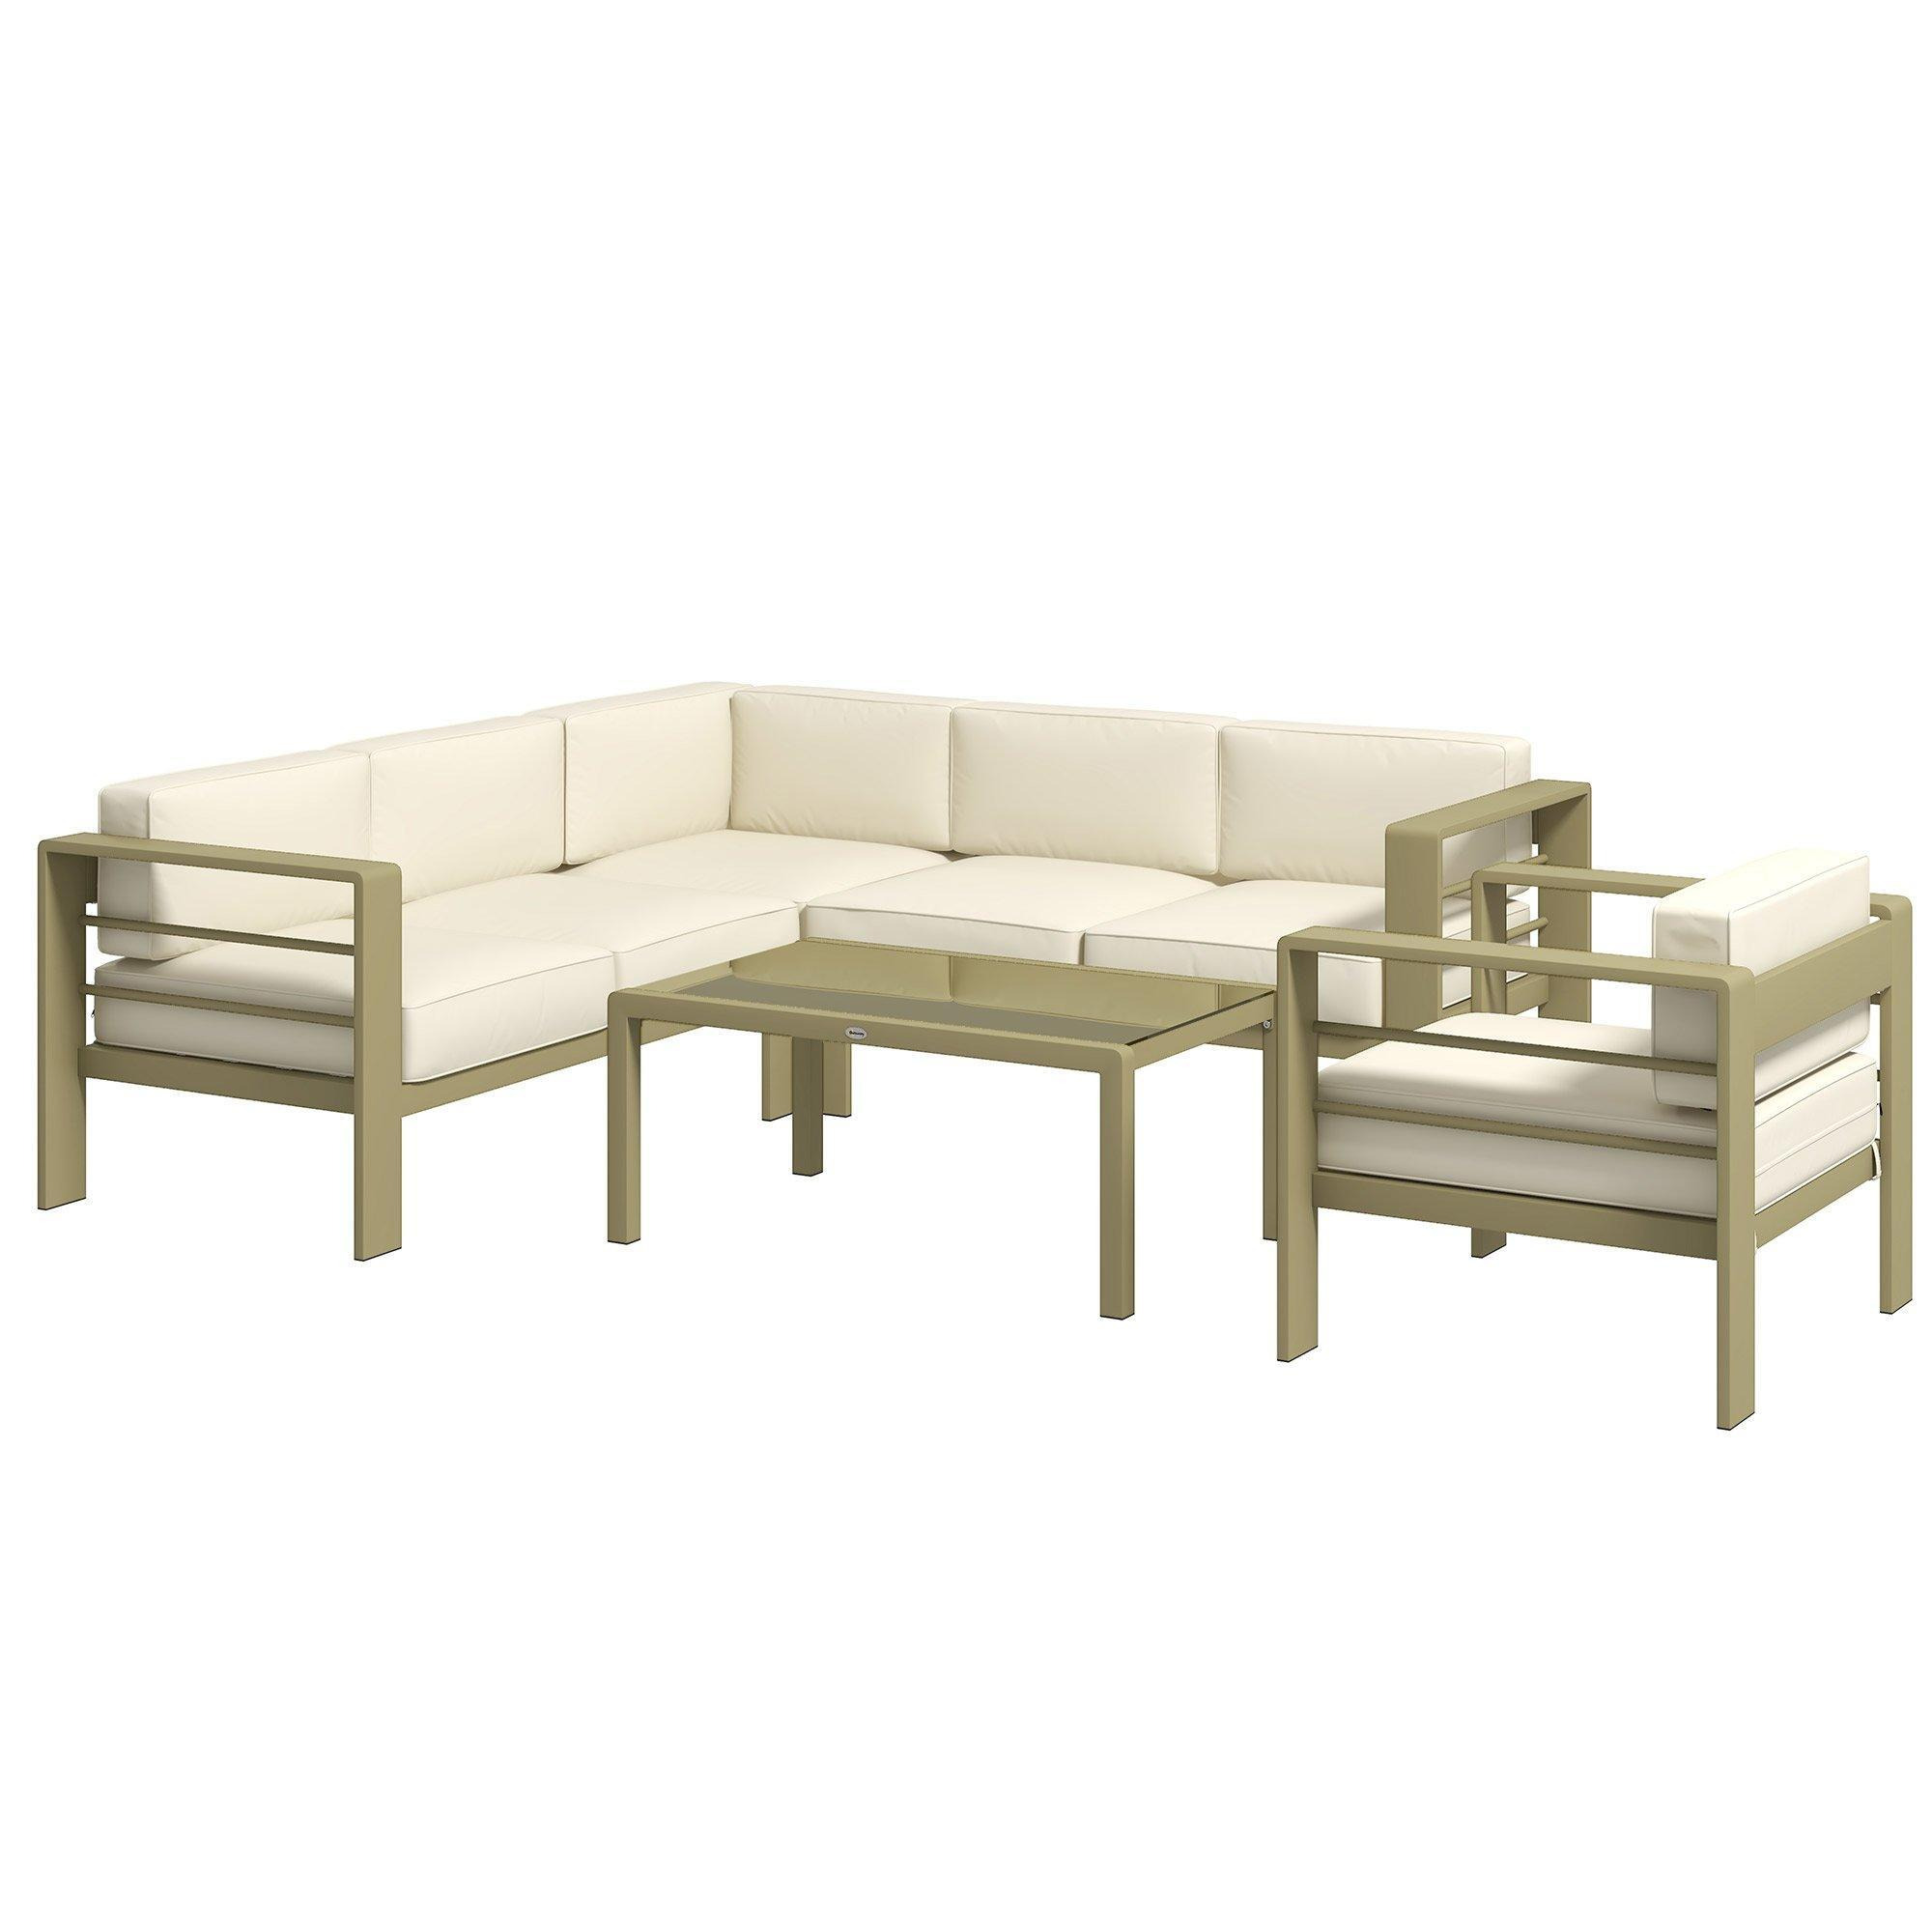 5-Piece Garden Sofa Set with Cushions, Aluminium Garden Furniture Sets - image 1